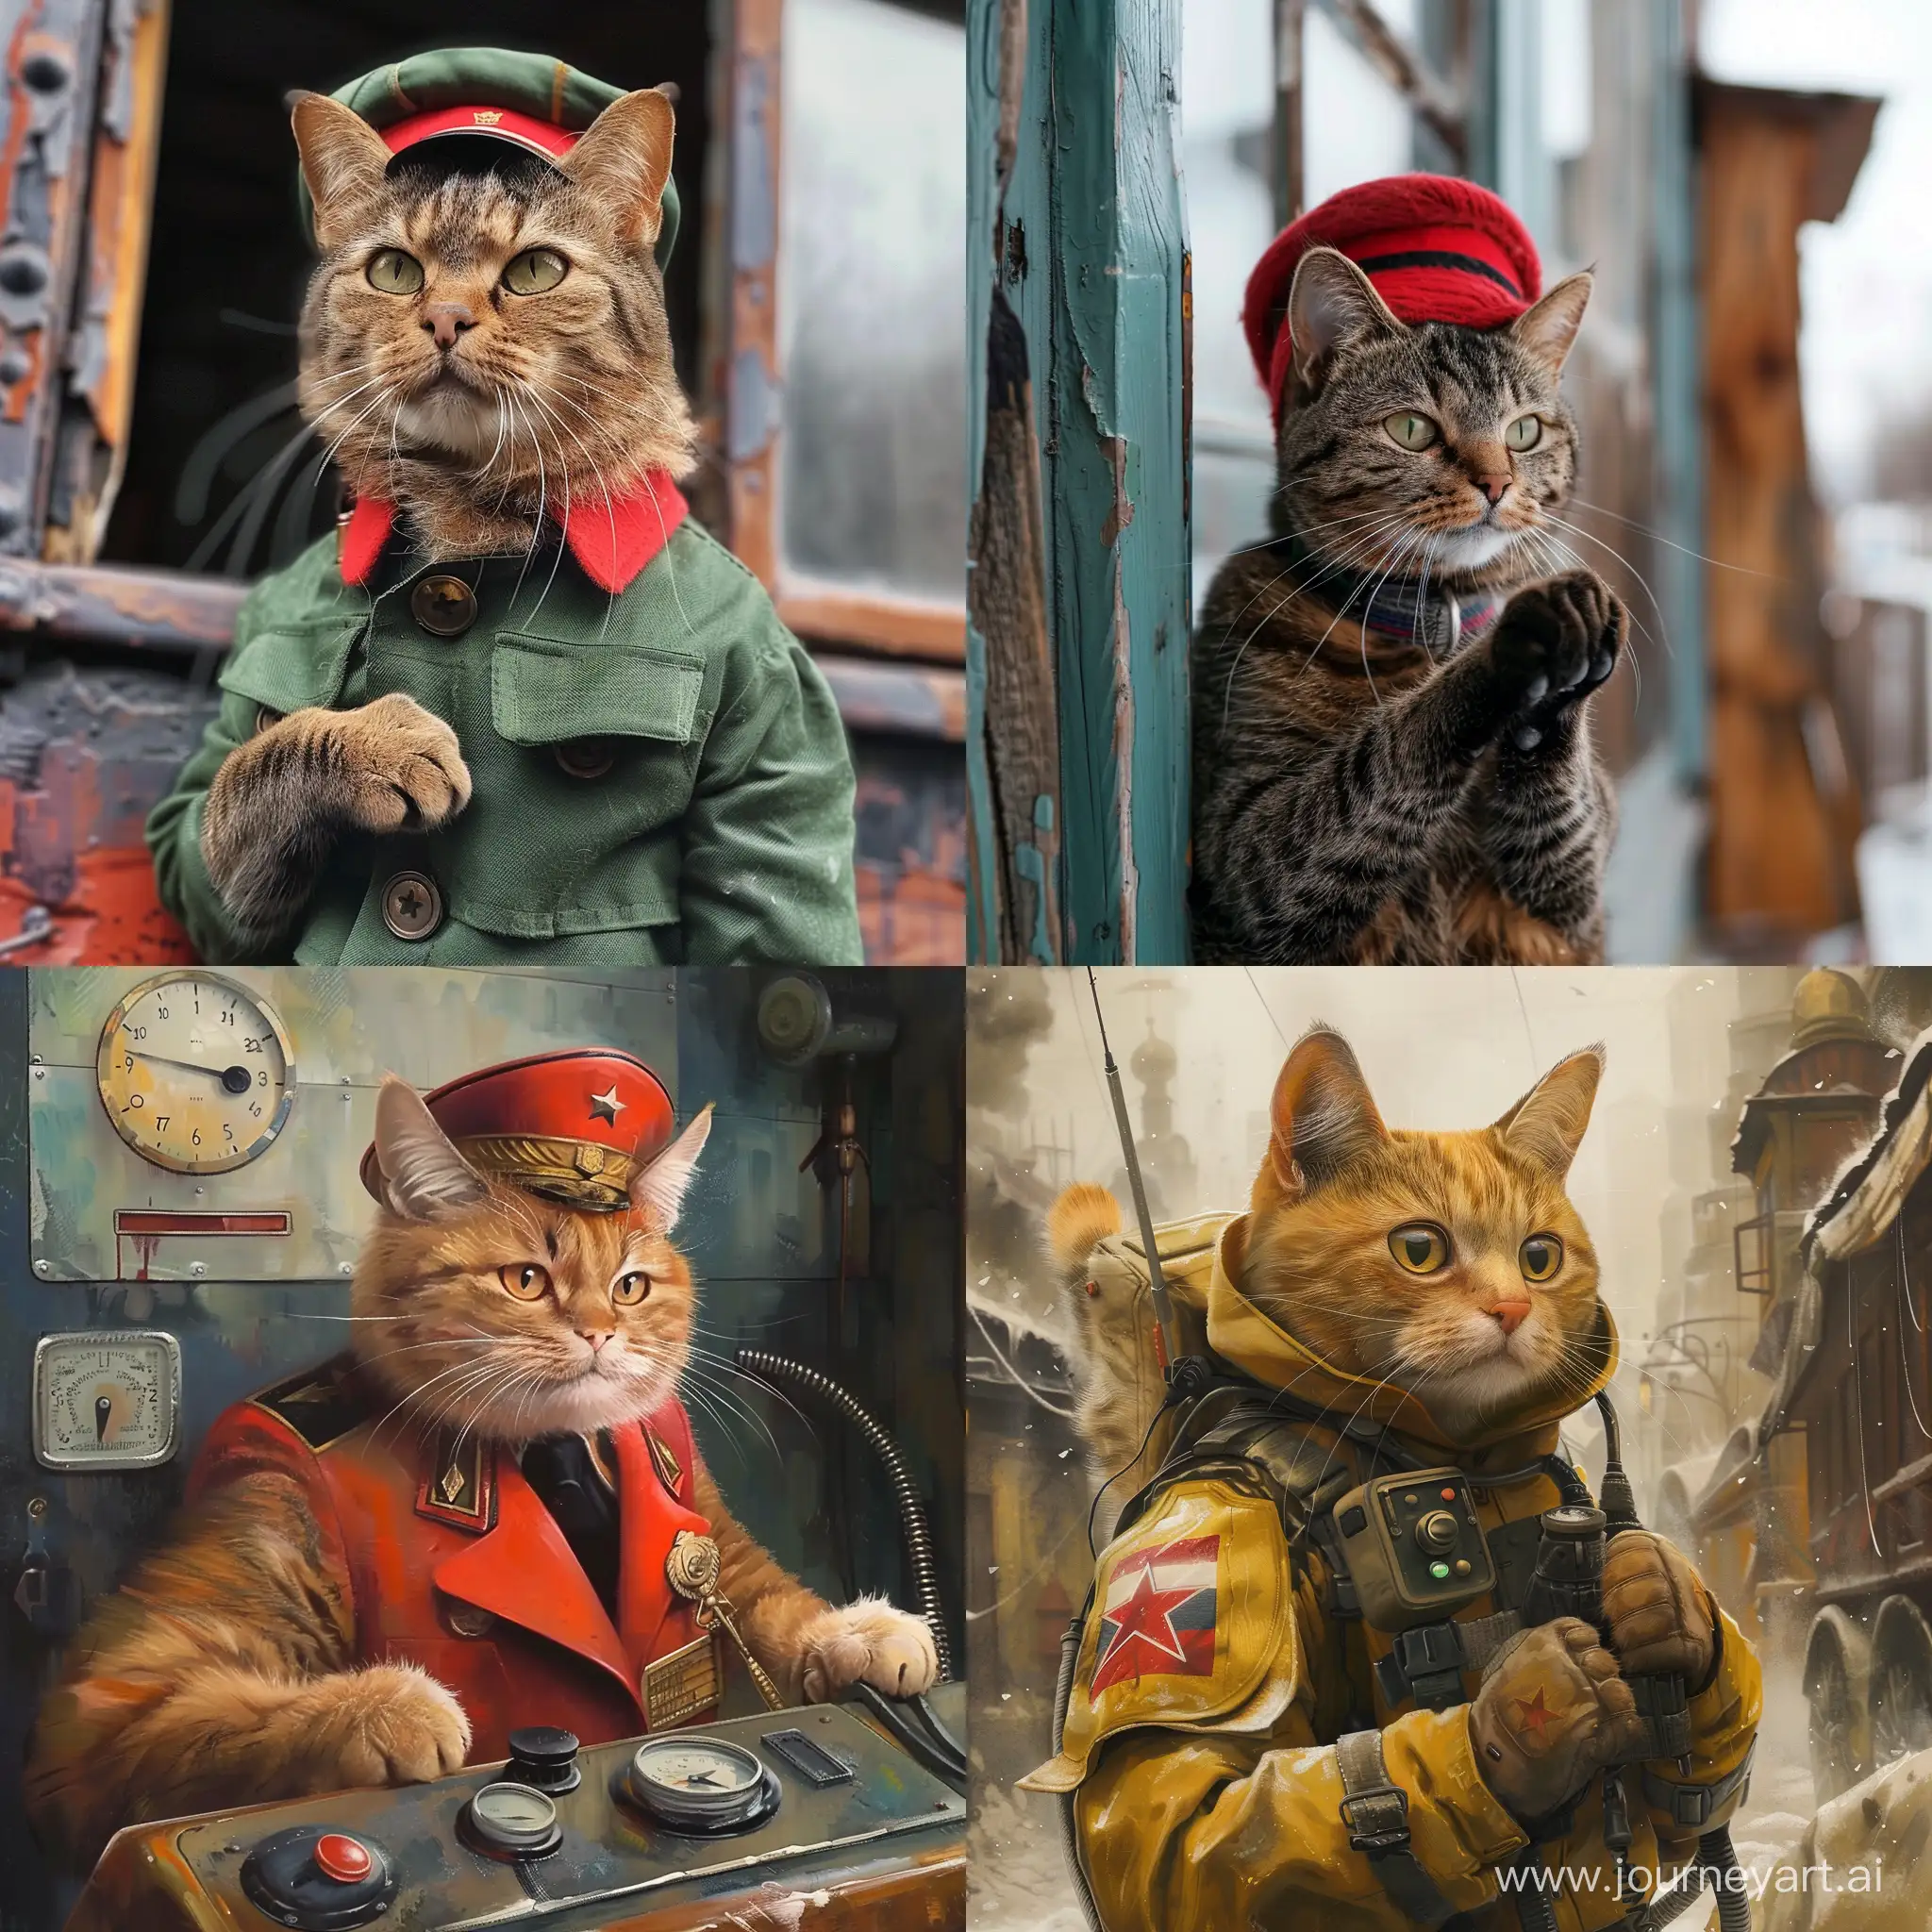 Adorable-Russian-Cat-Signaling-in-Vibrant-Artistic-Display